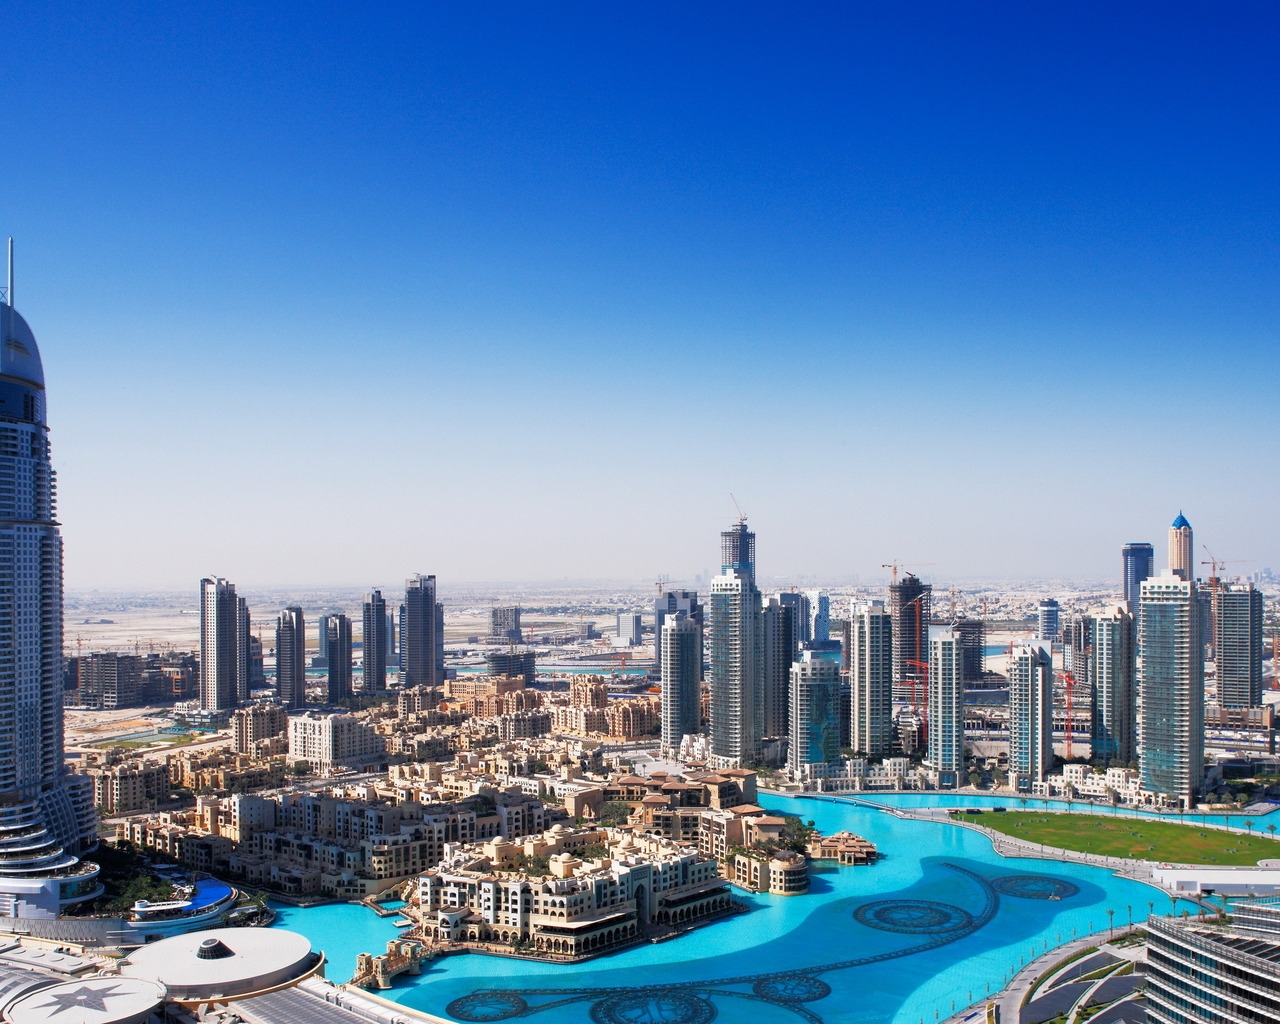 Dubai Overview for 1280 x 1024 resolution